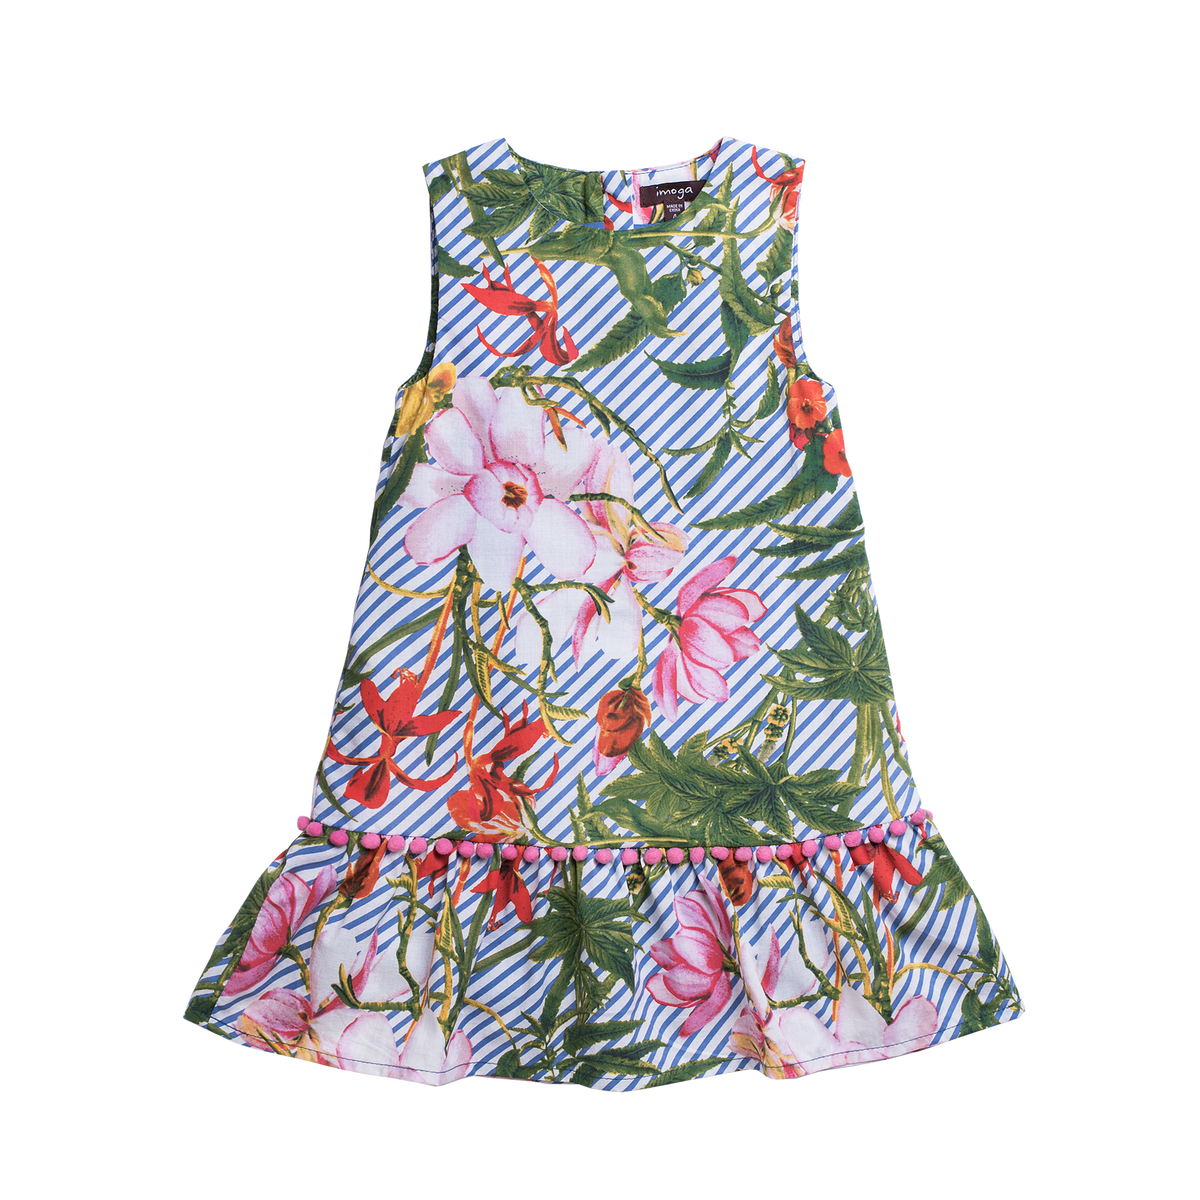 Girls tropical print sleeveless dress by Imoga.